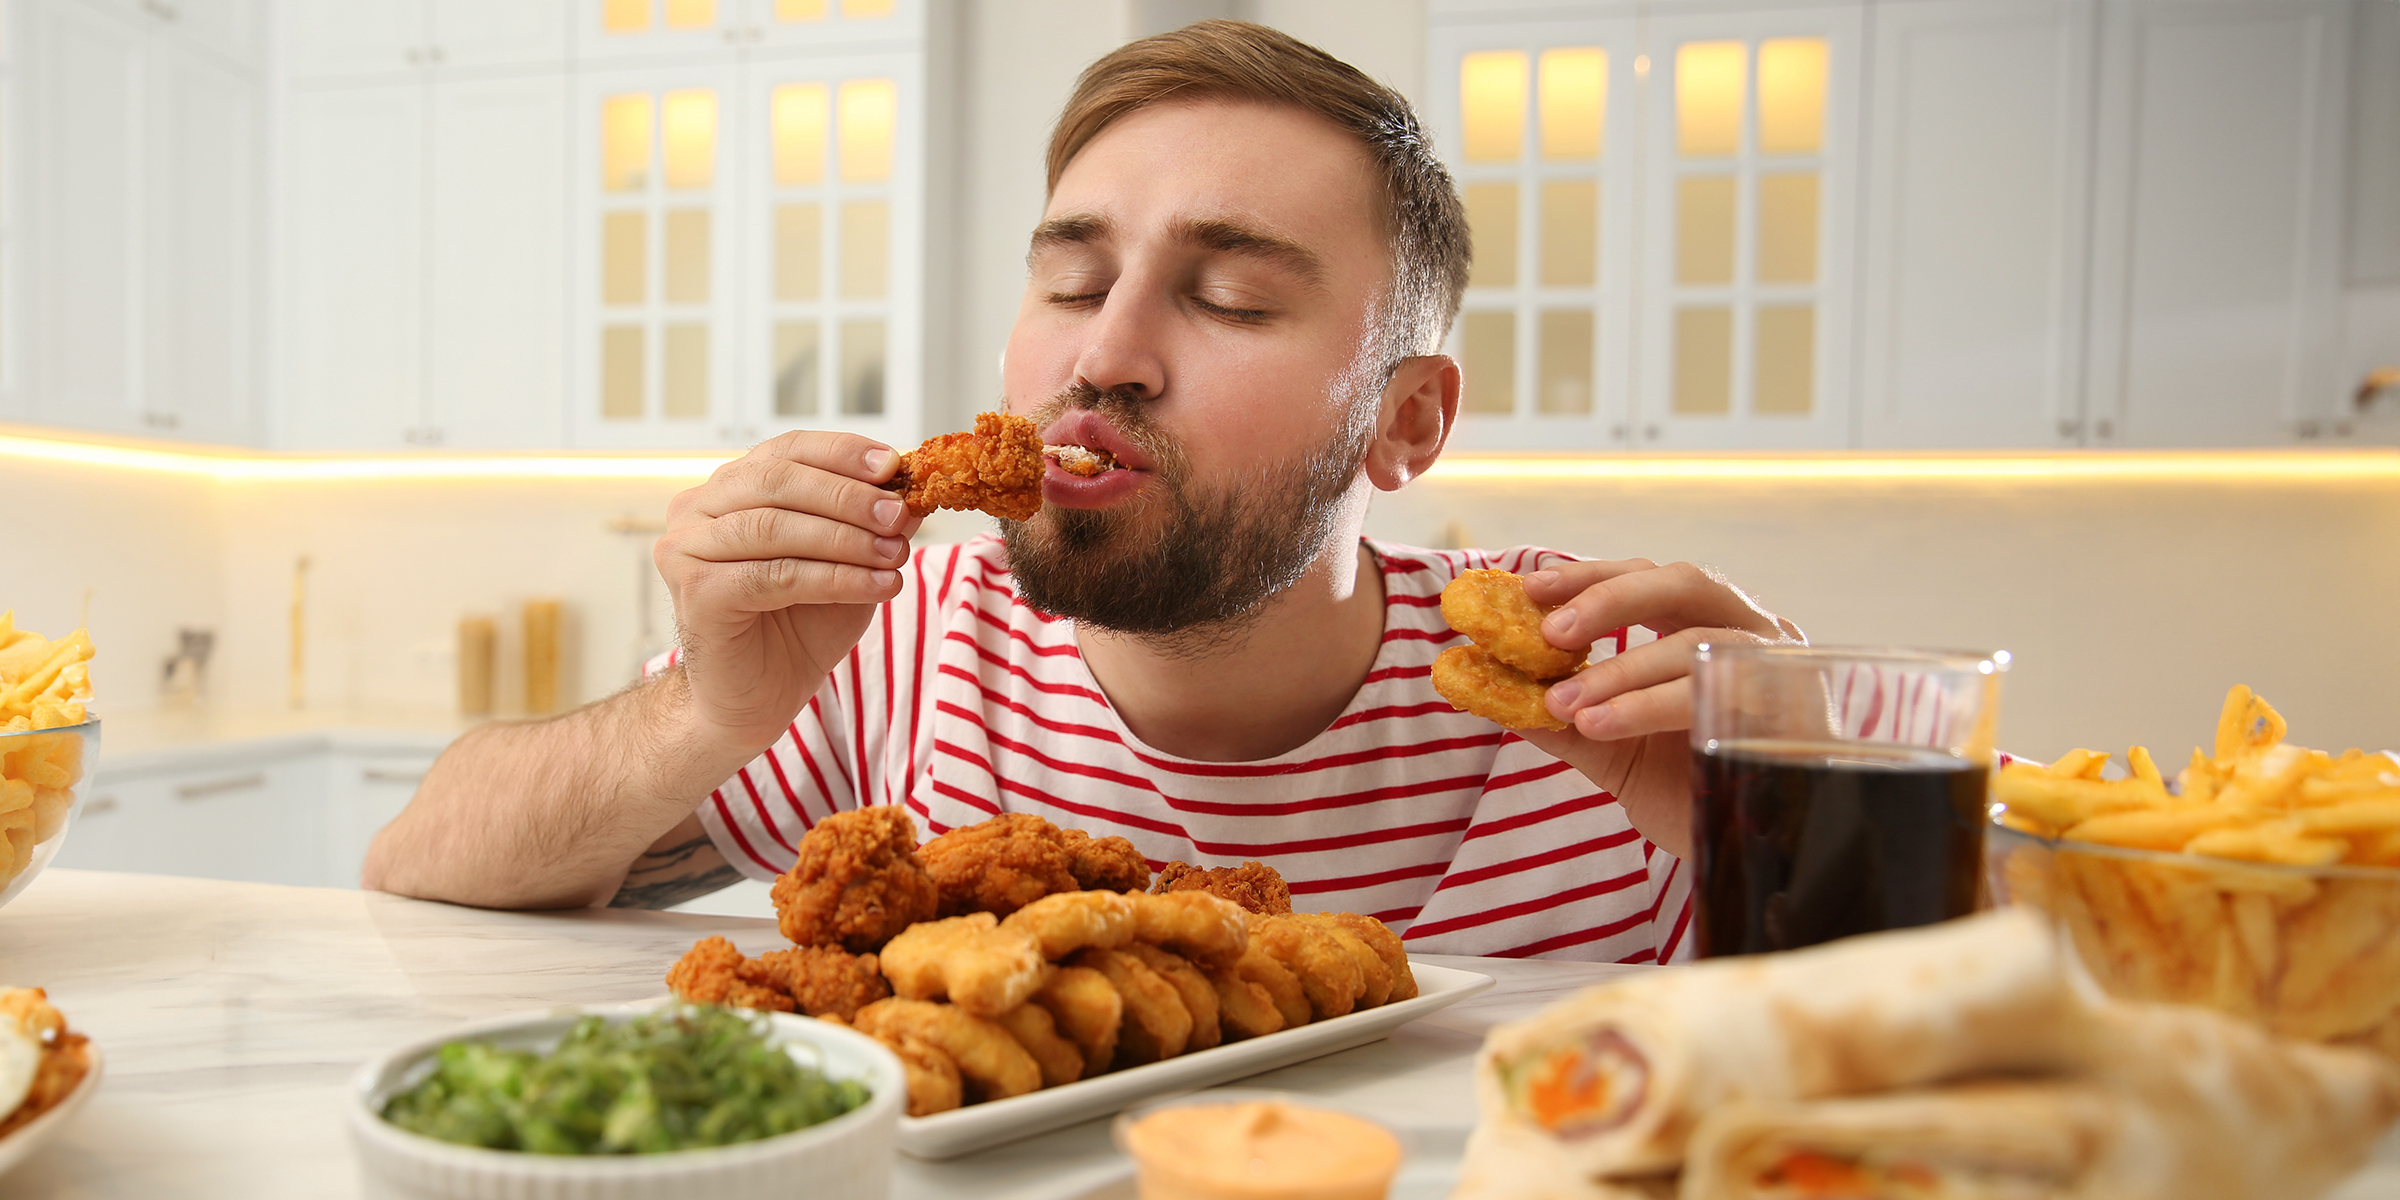 Man eating | Source: Shutterstock